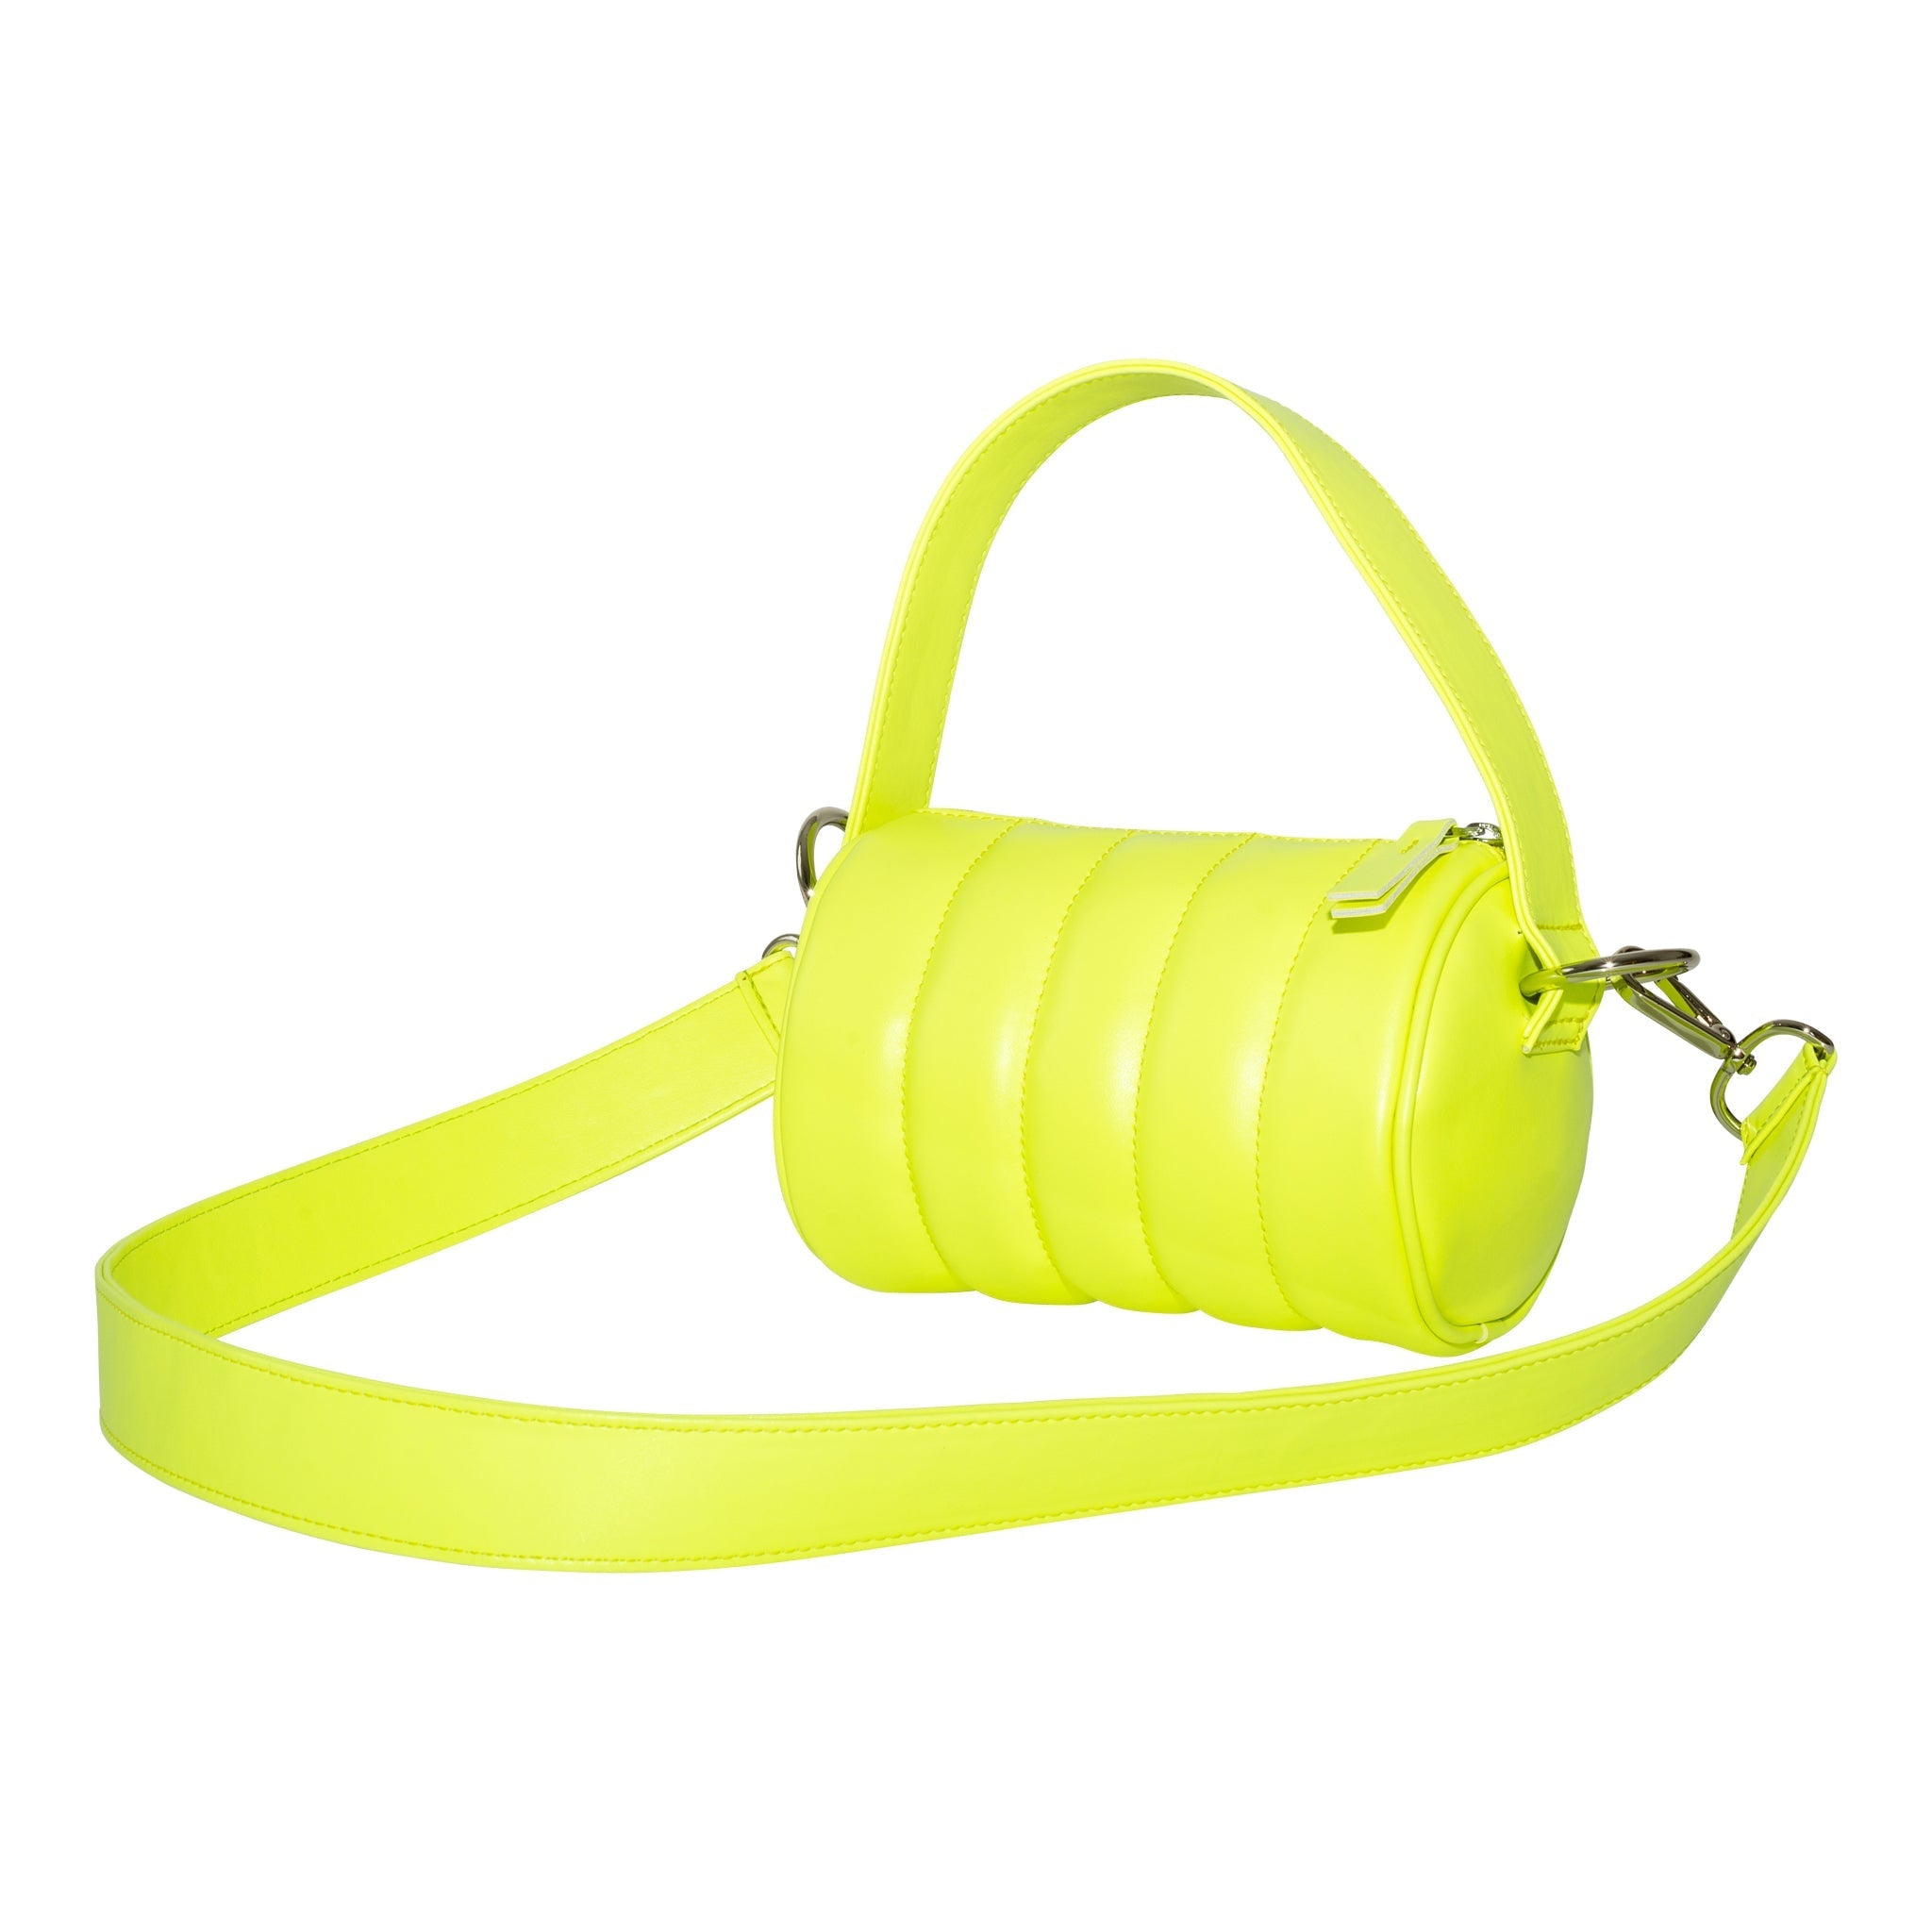 MINI Lifestyle Collection: MINI Big Duffle Bag, gold. (11/2013)